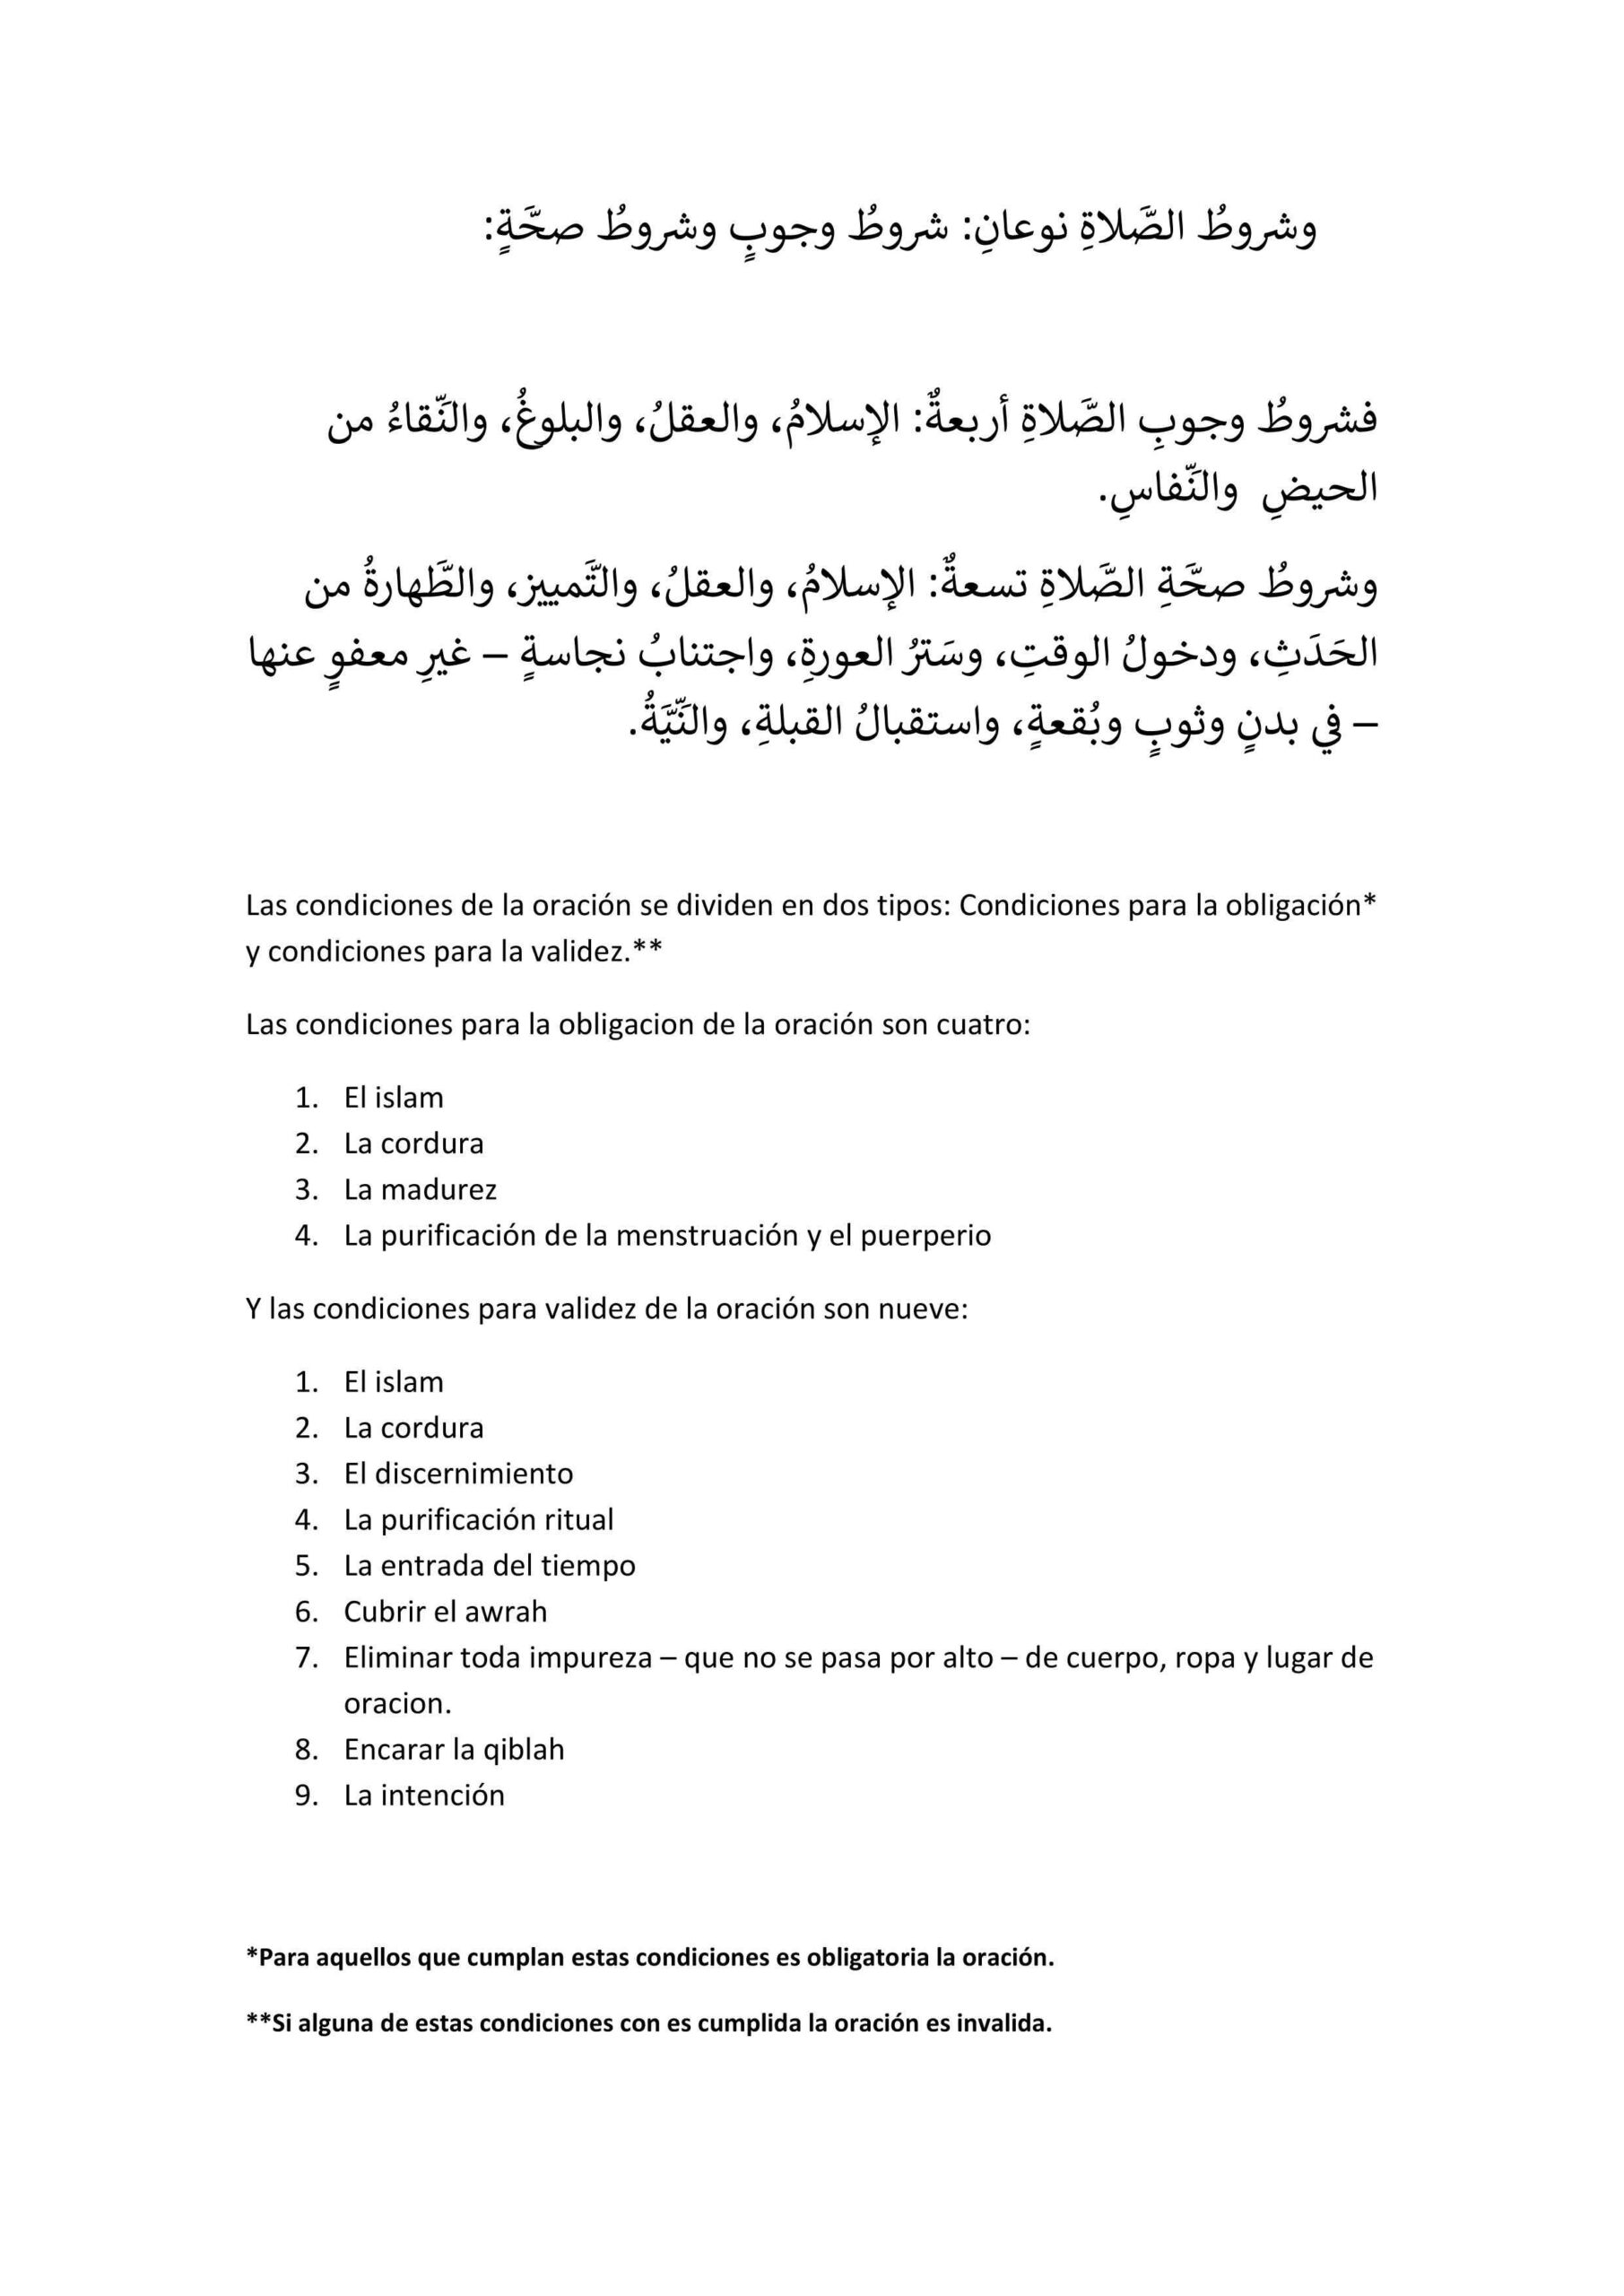 إسباني - المفتاح في الفقه - La llave hacia el fiqh sobre la escuela del Imam Ahmad ibn hanbal.pdf, 7-Sayfa 